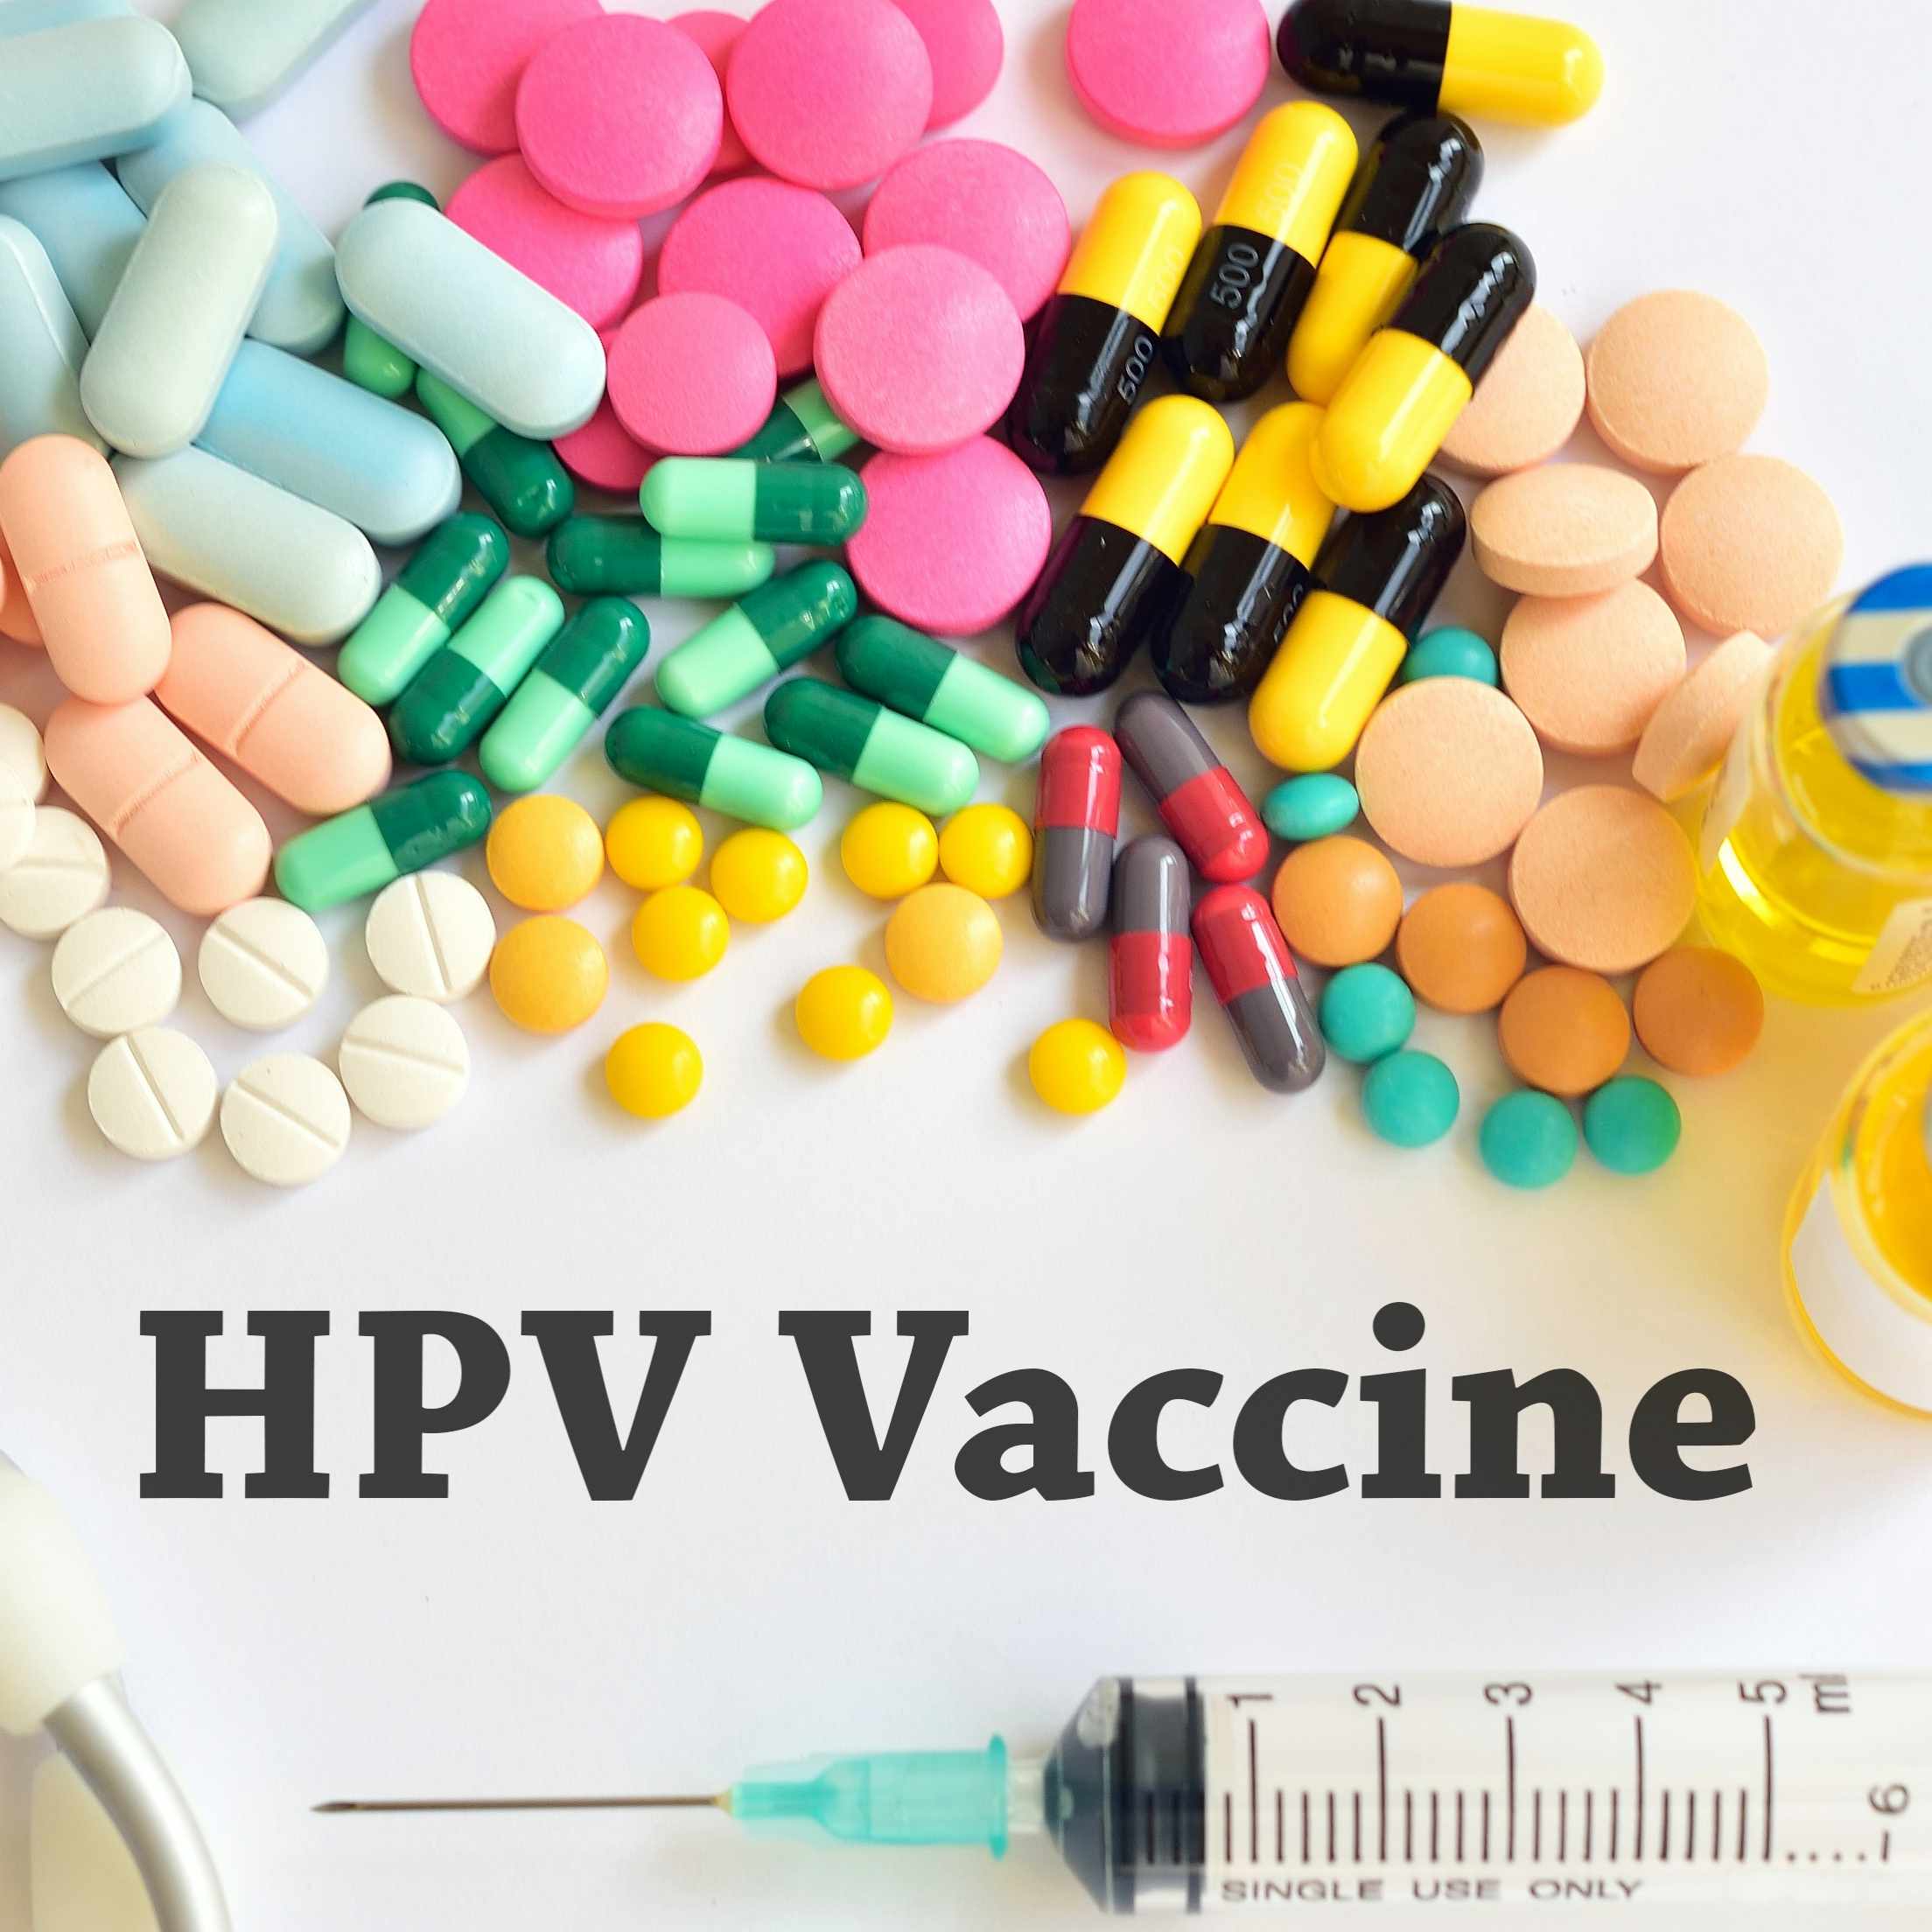 pills, needle, medicine for HPV Vaccine